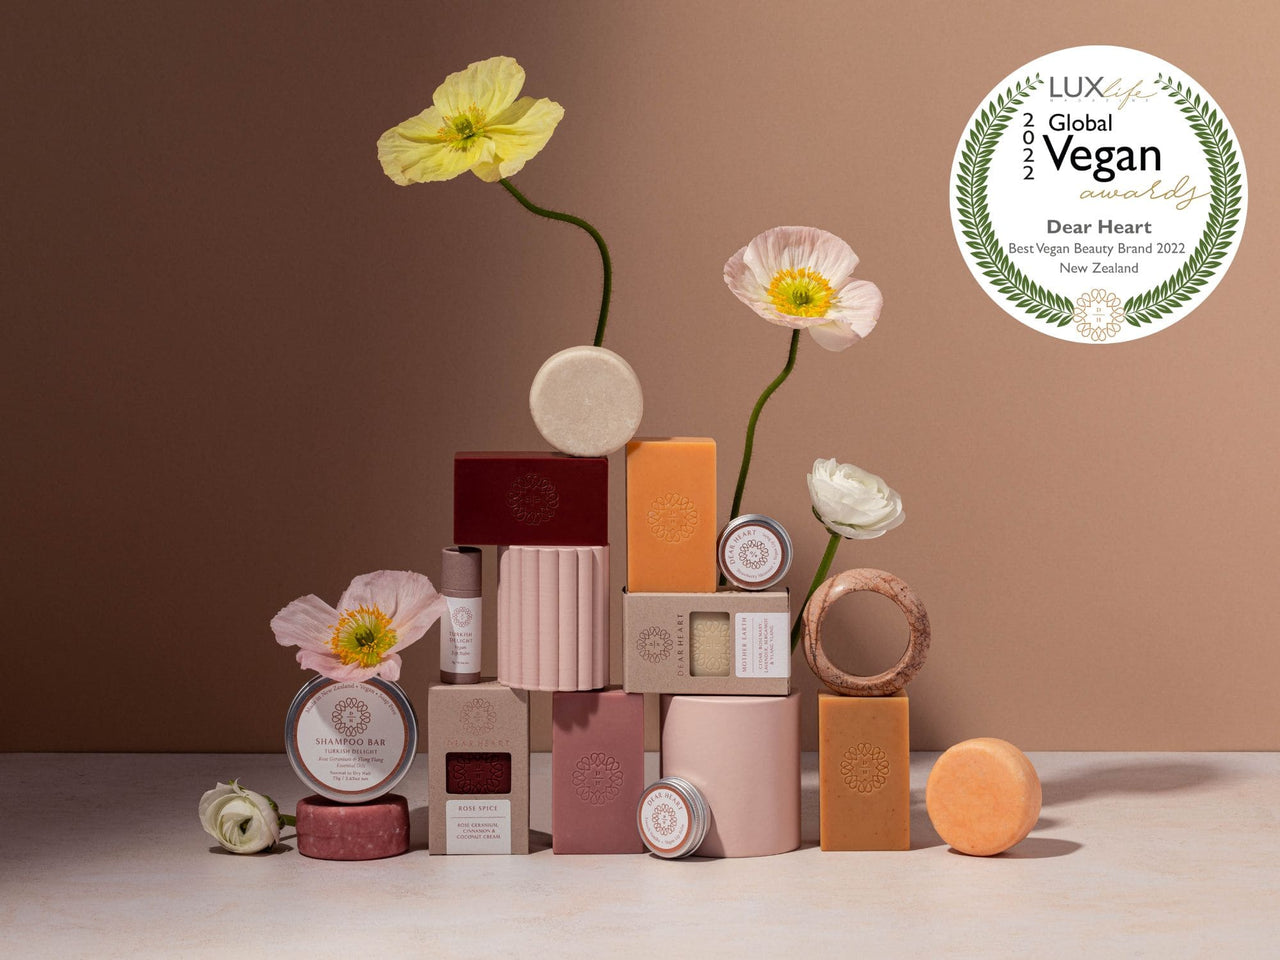 collection of handmade soaps lip balms shampoo bars nz made vegan brand